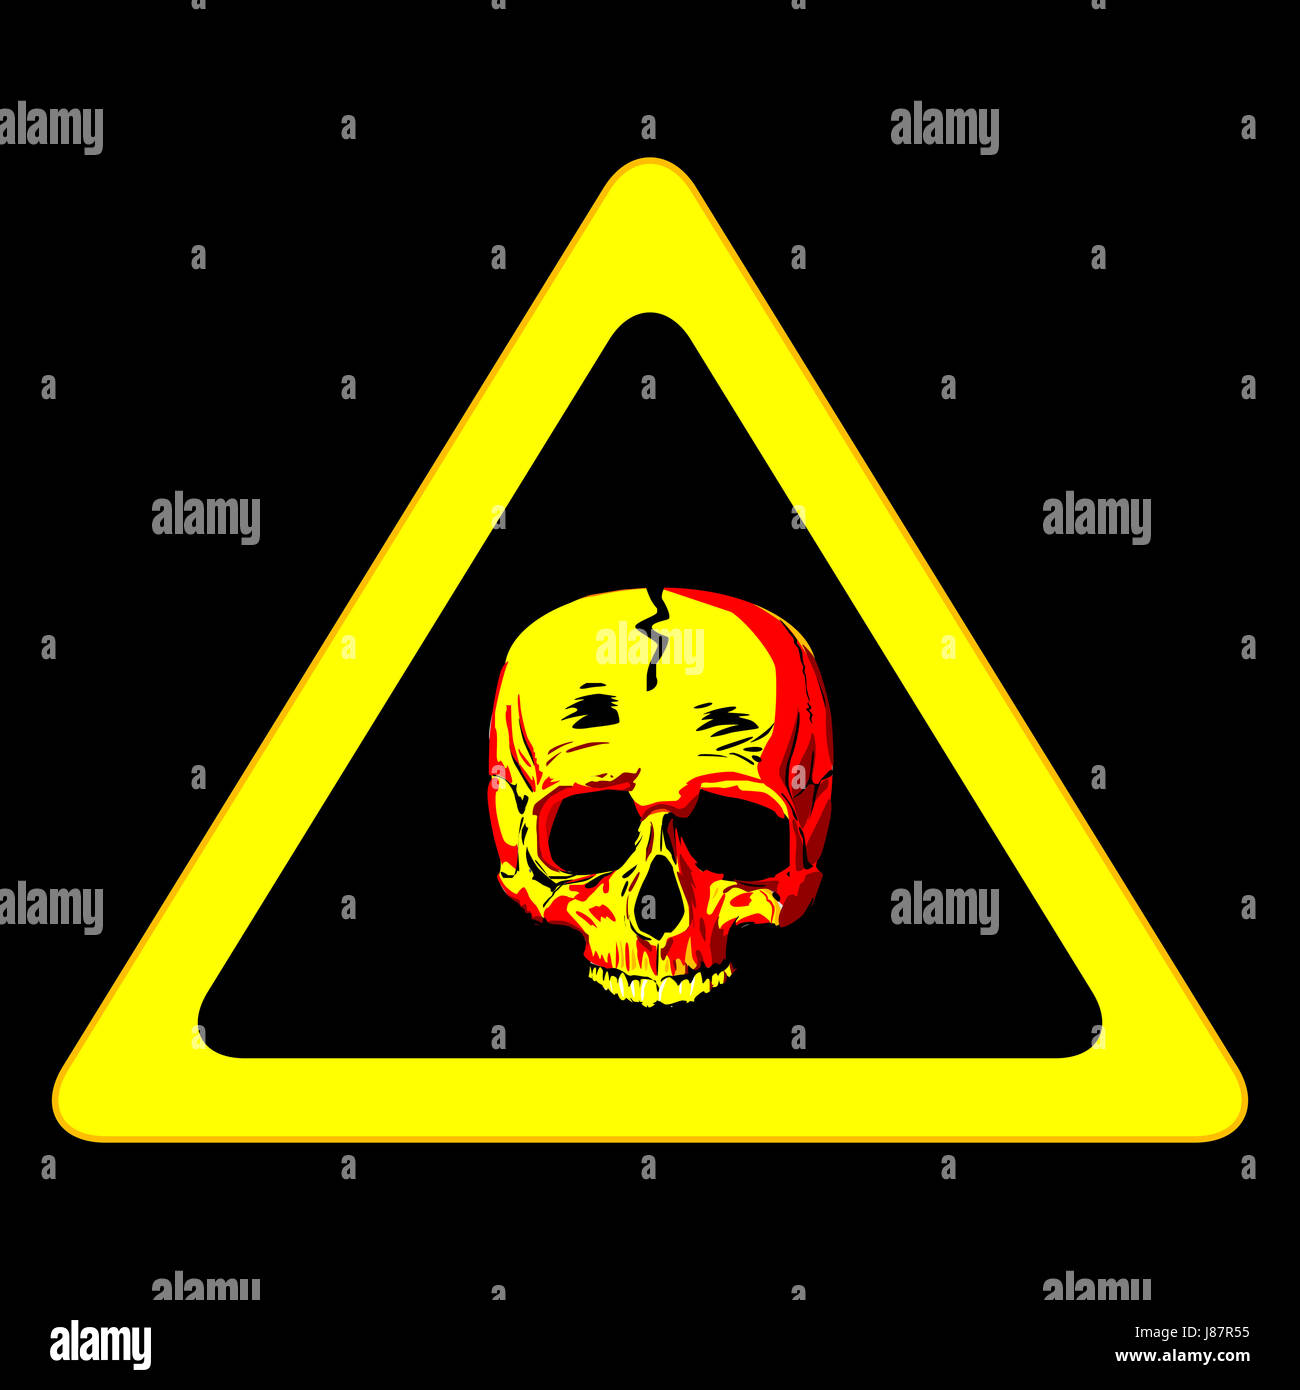 Beware Alert Attention Caution Risk Warning Stock Photo 632466596 |  Shutterstock